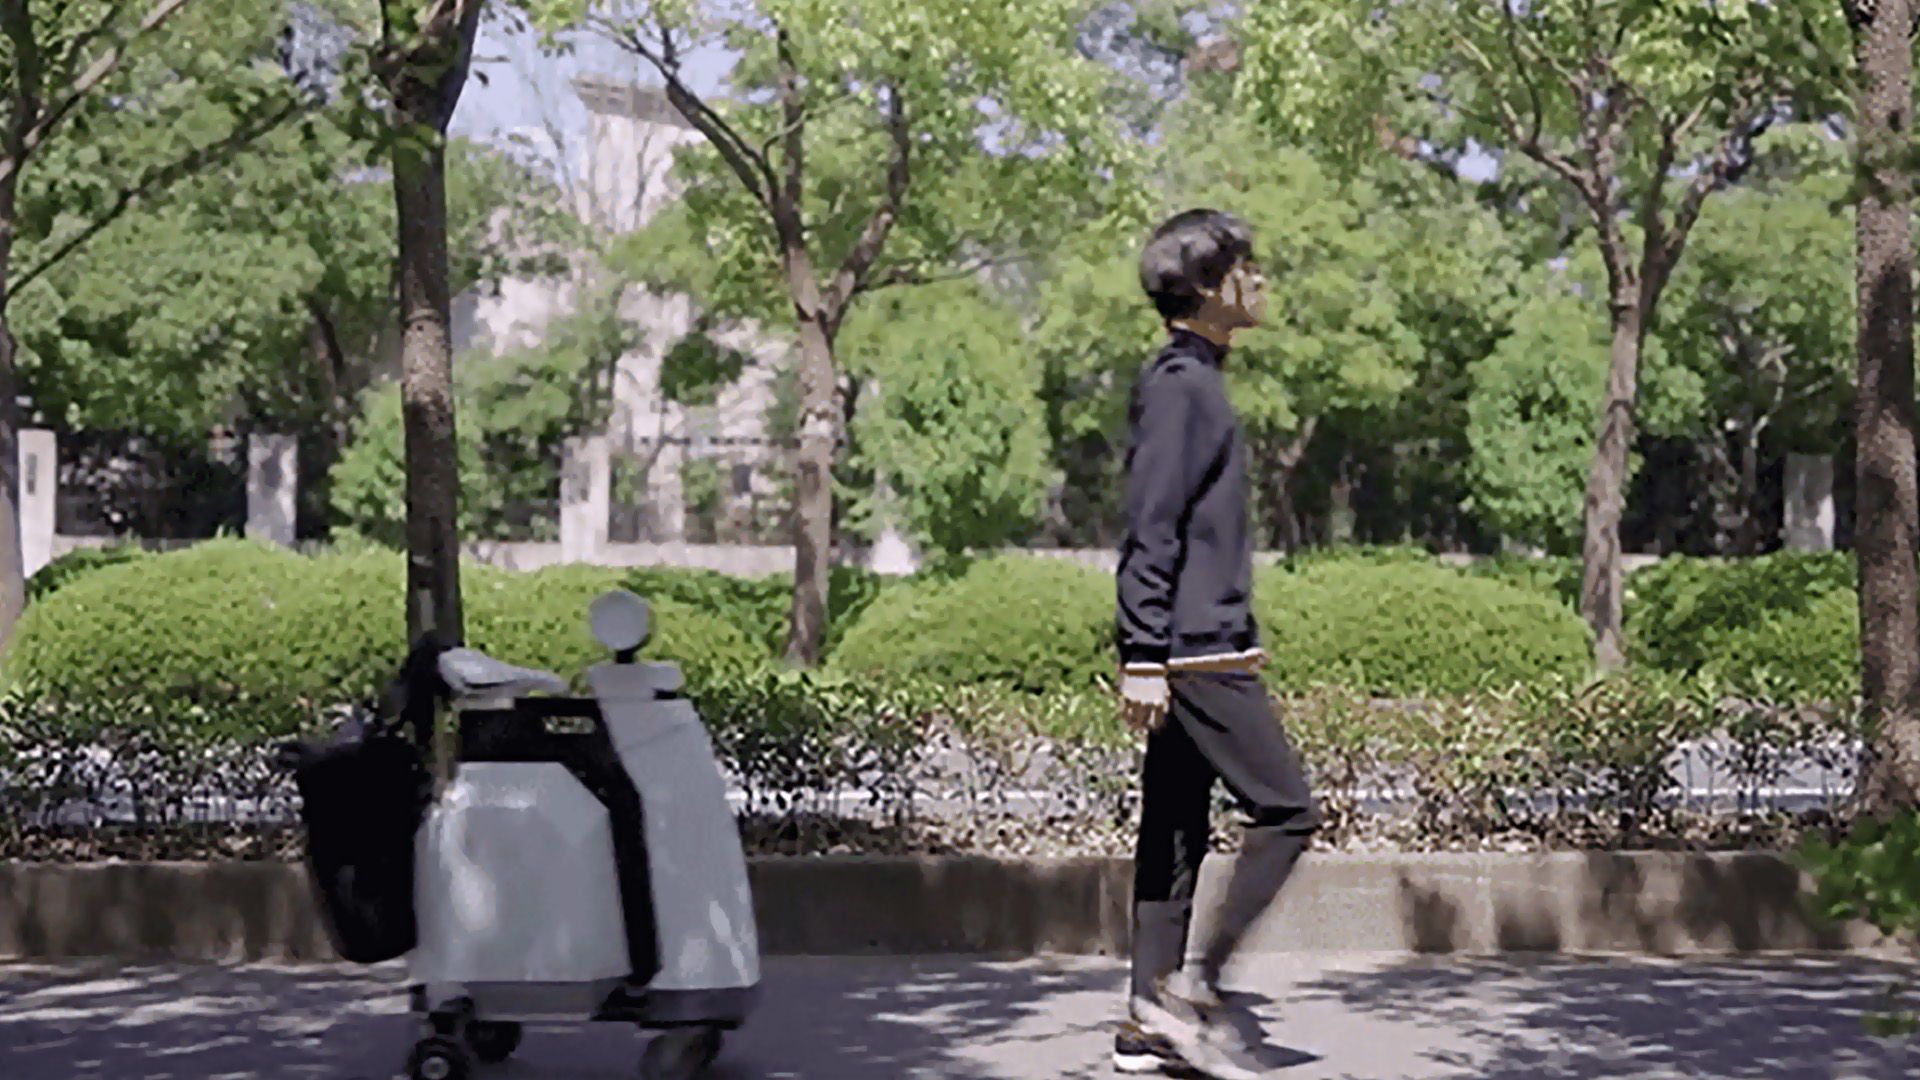 Human "partner" - following the transport robot